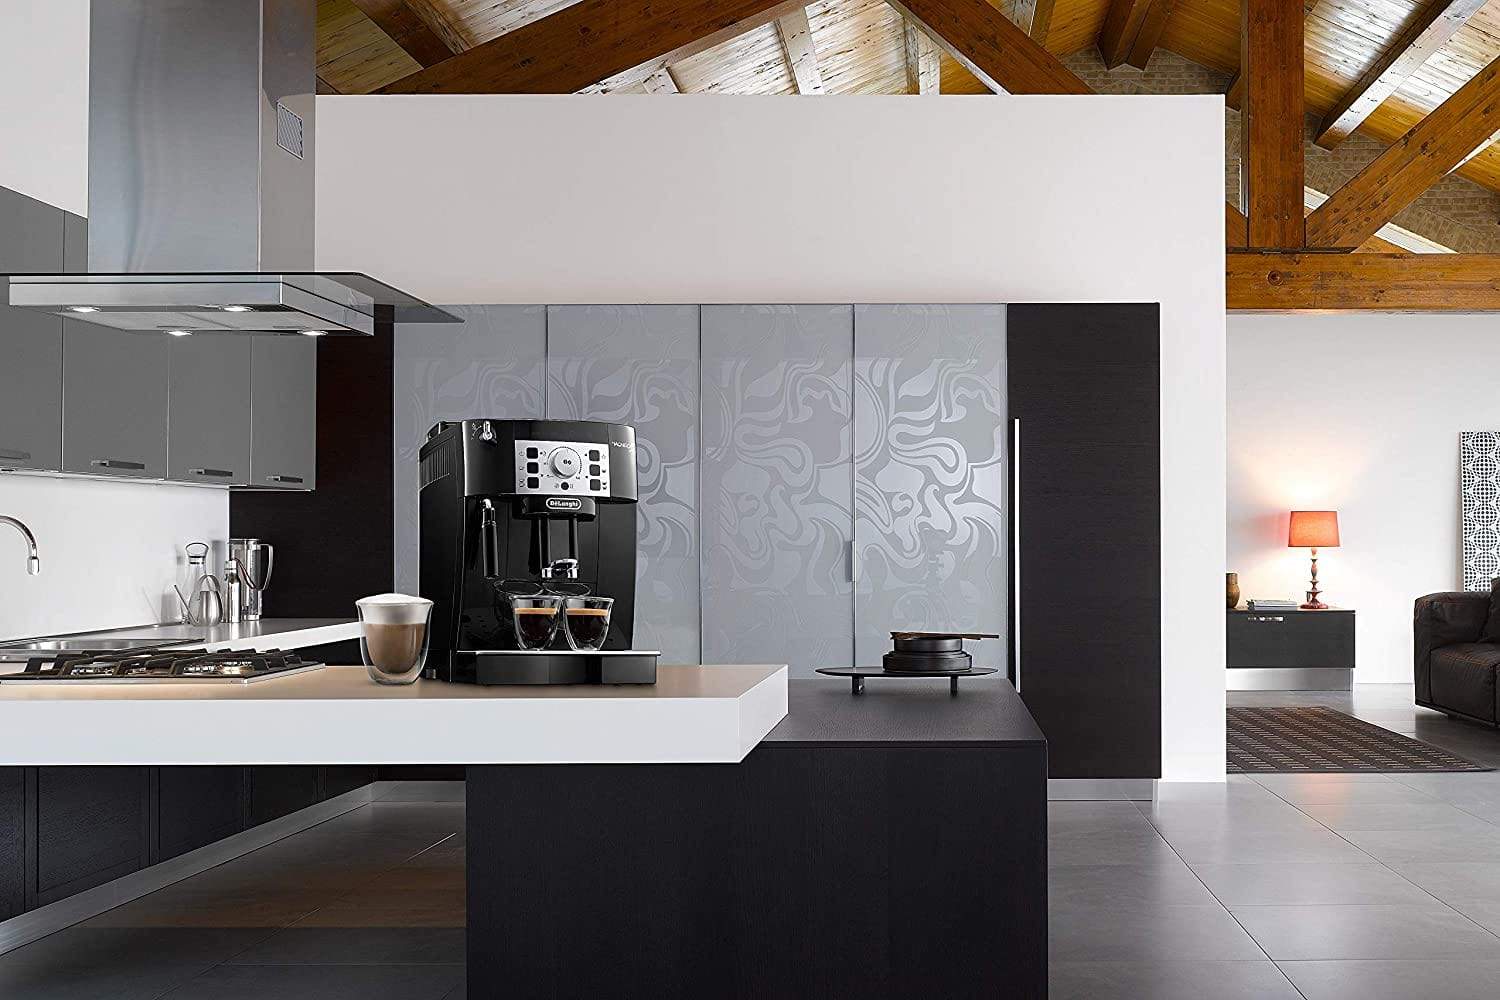 De'Longhi Magnifica S Fully Automatic Coffee Machine ECAM22.110.B